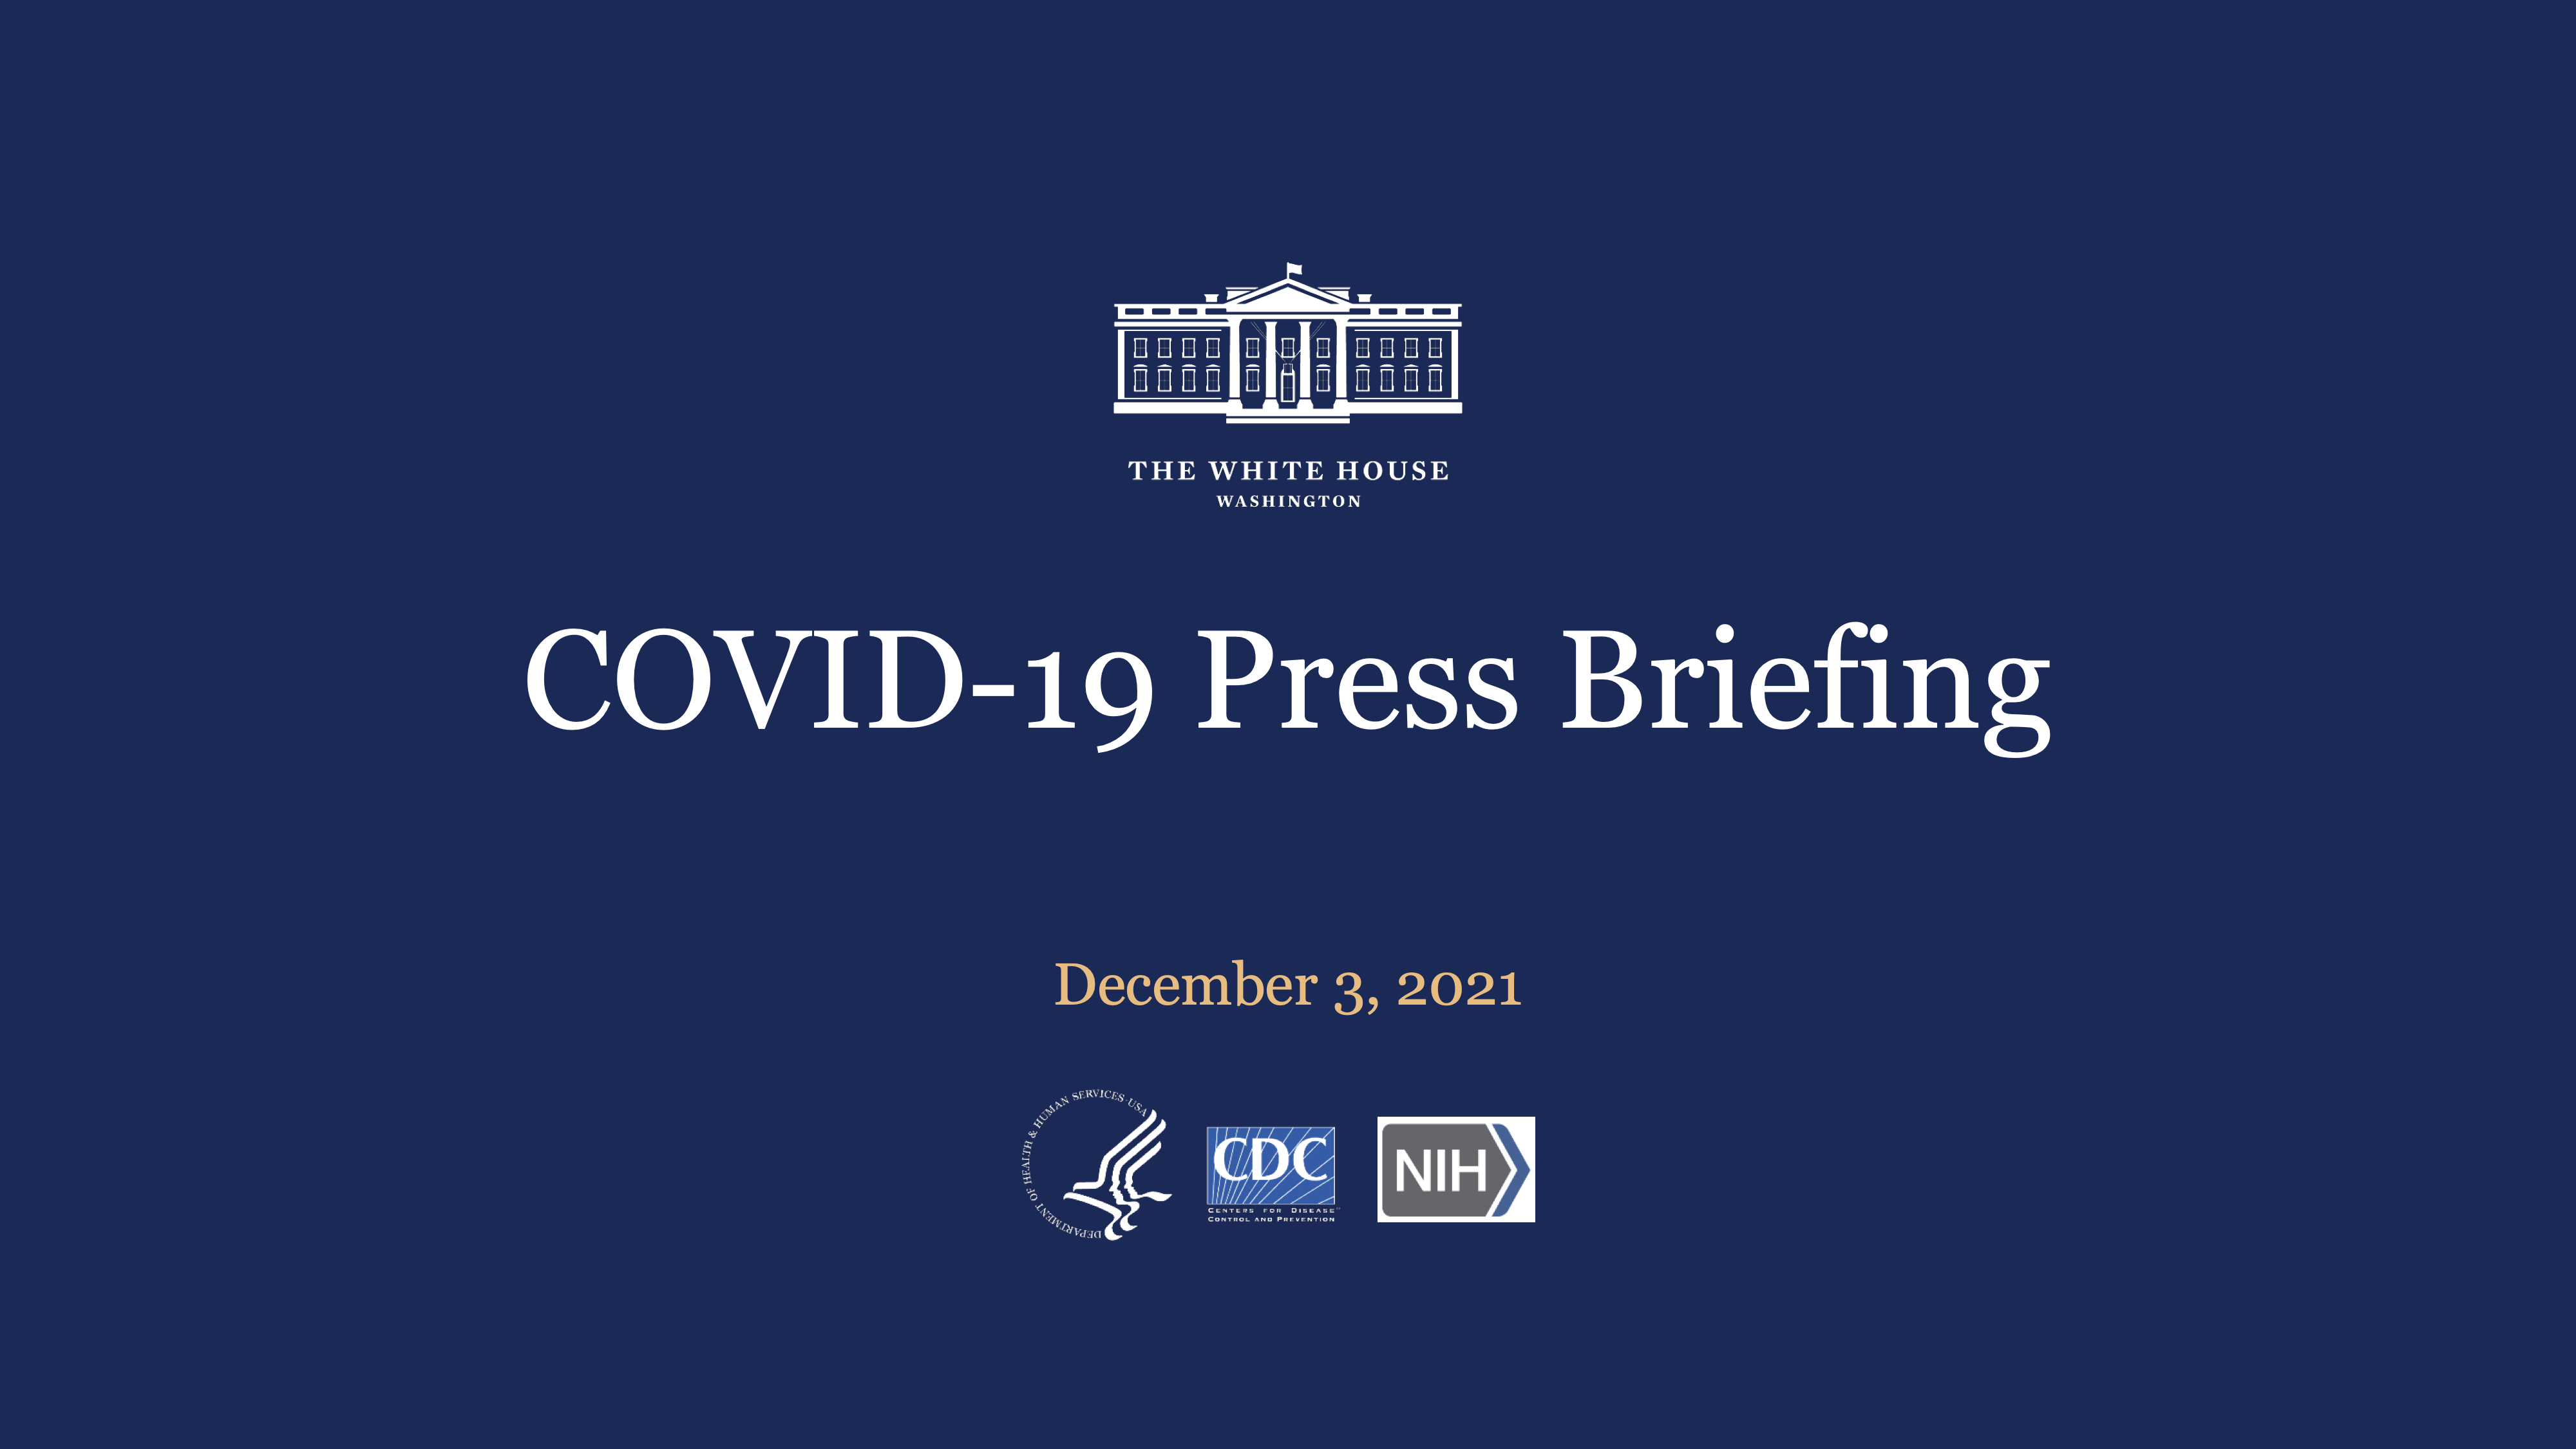 White House COVID-19 Press Briefing